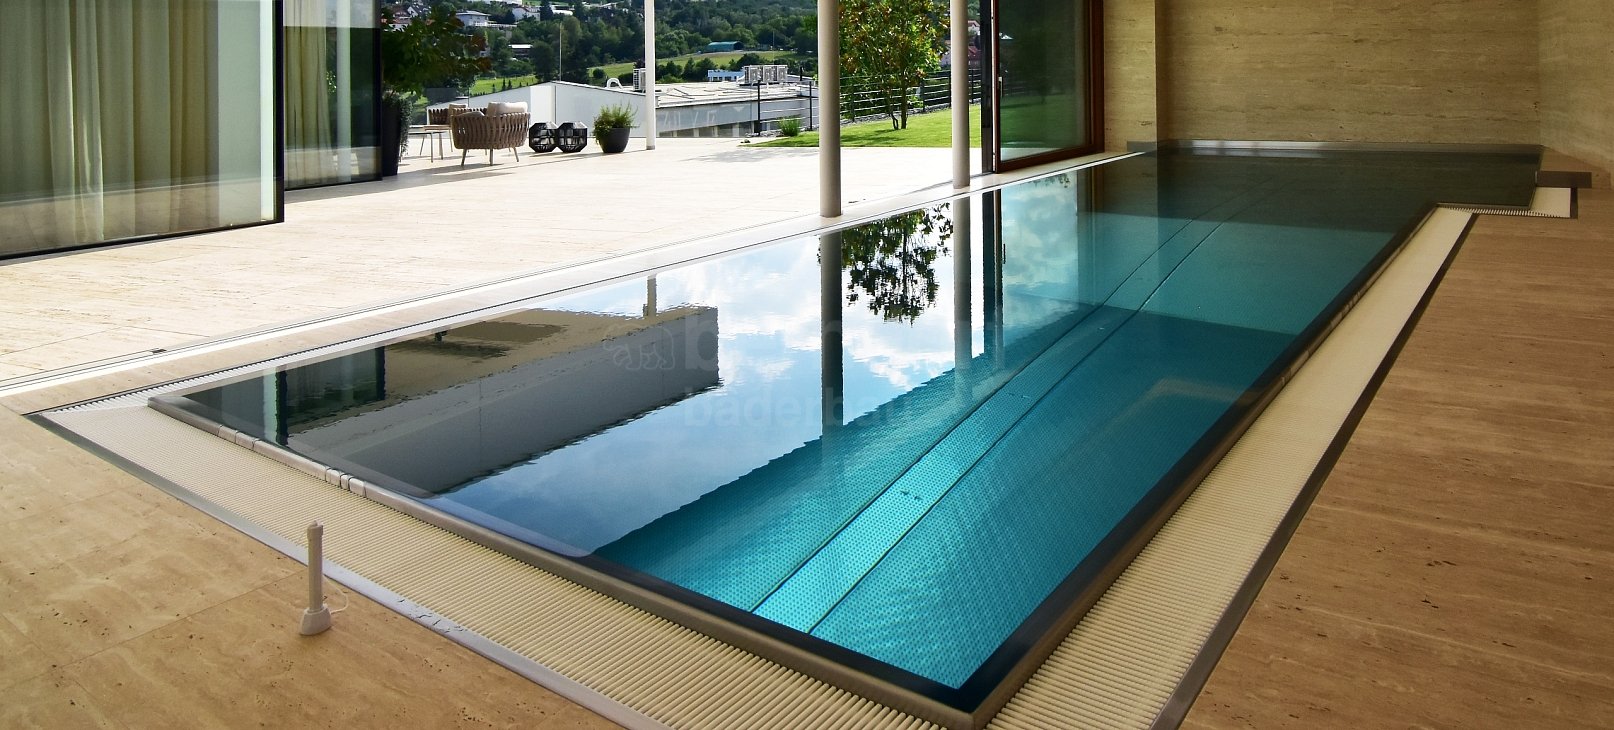 Indoor privat pool with overflow 10